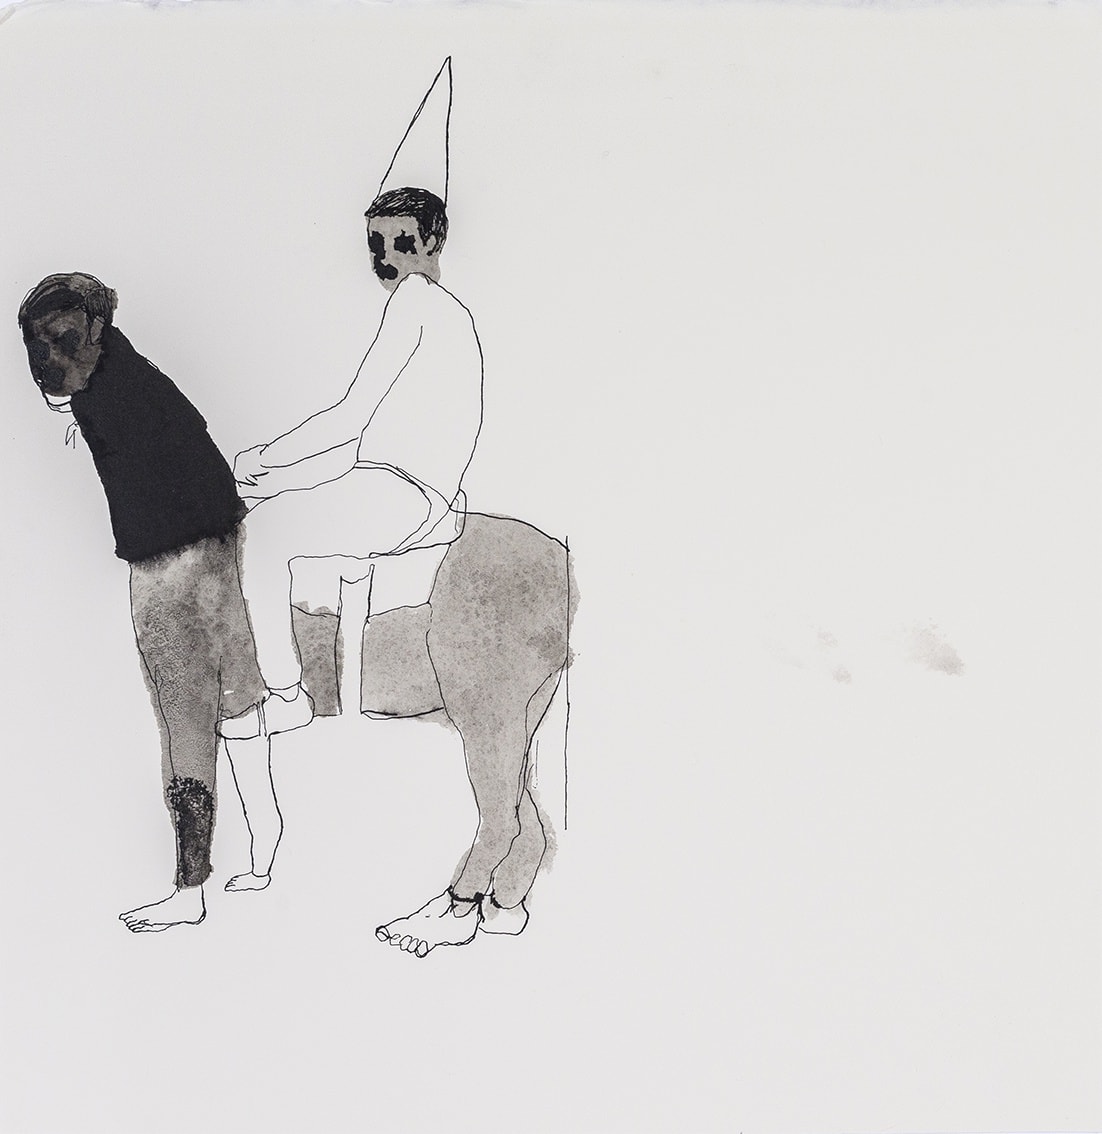 Eduardo Berliner, Cavalo [Horse], 2020